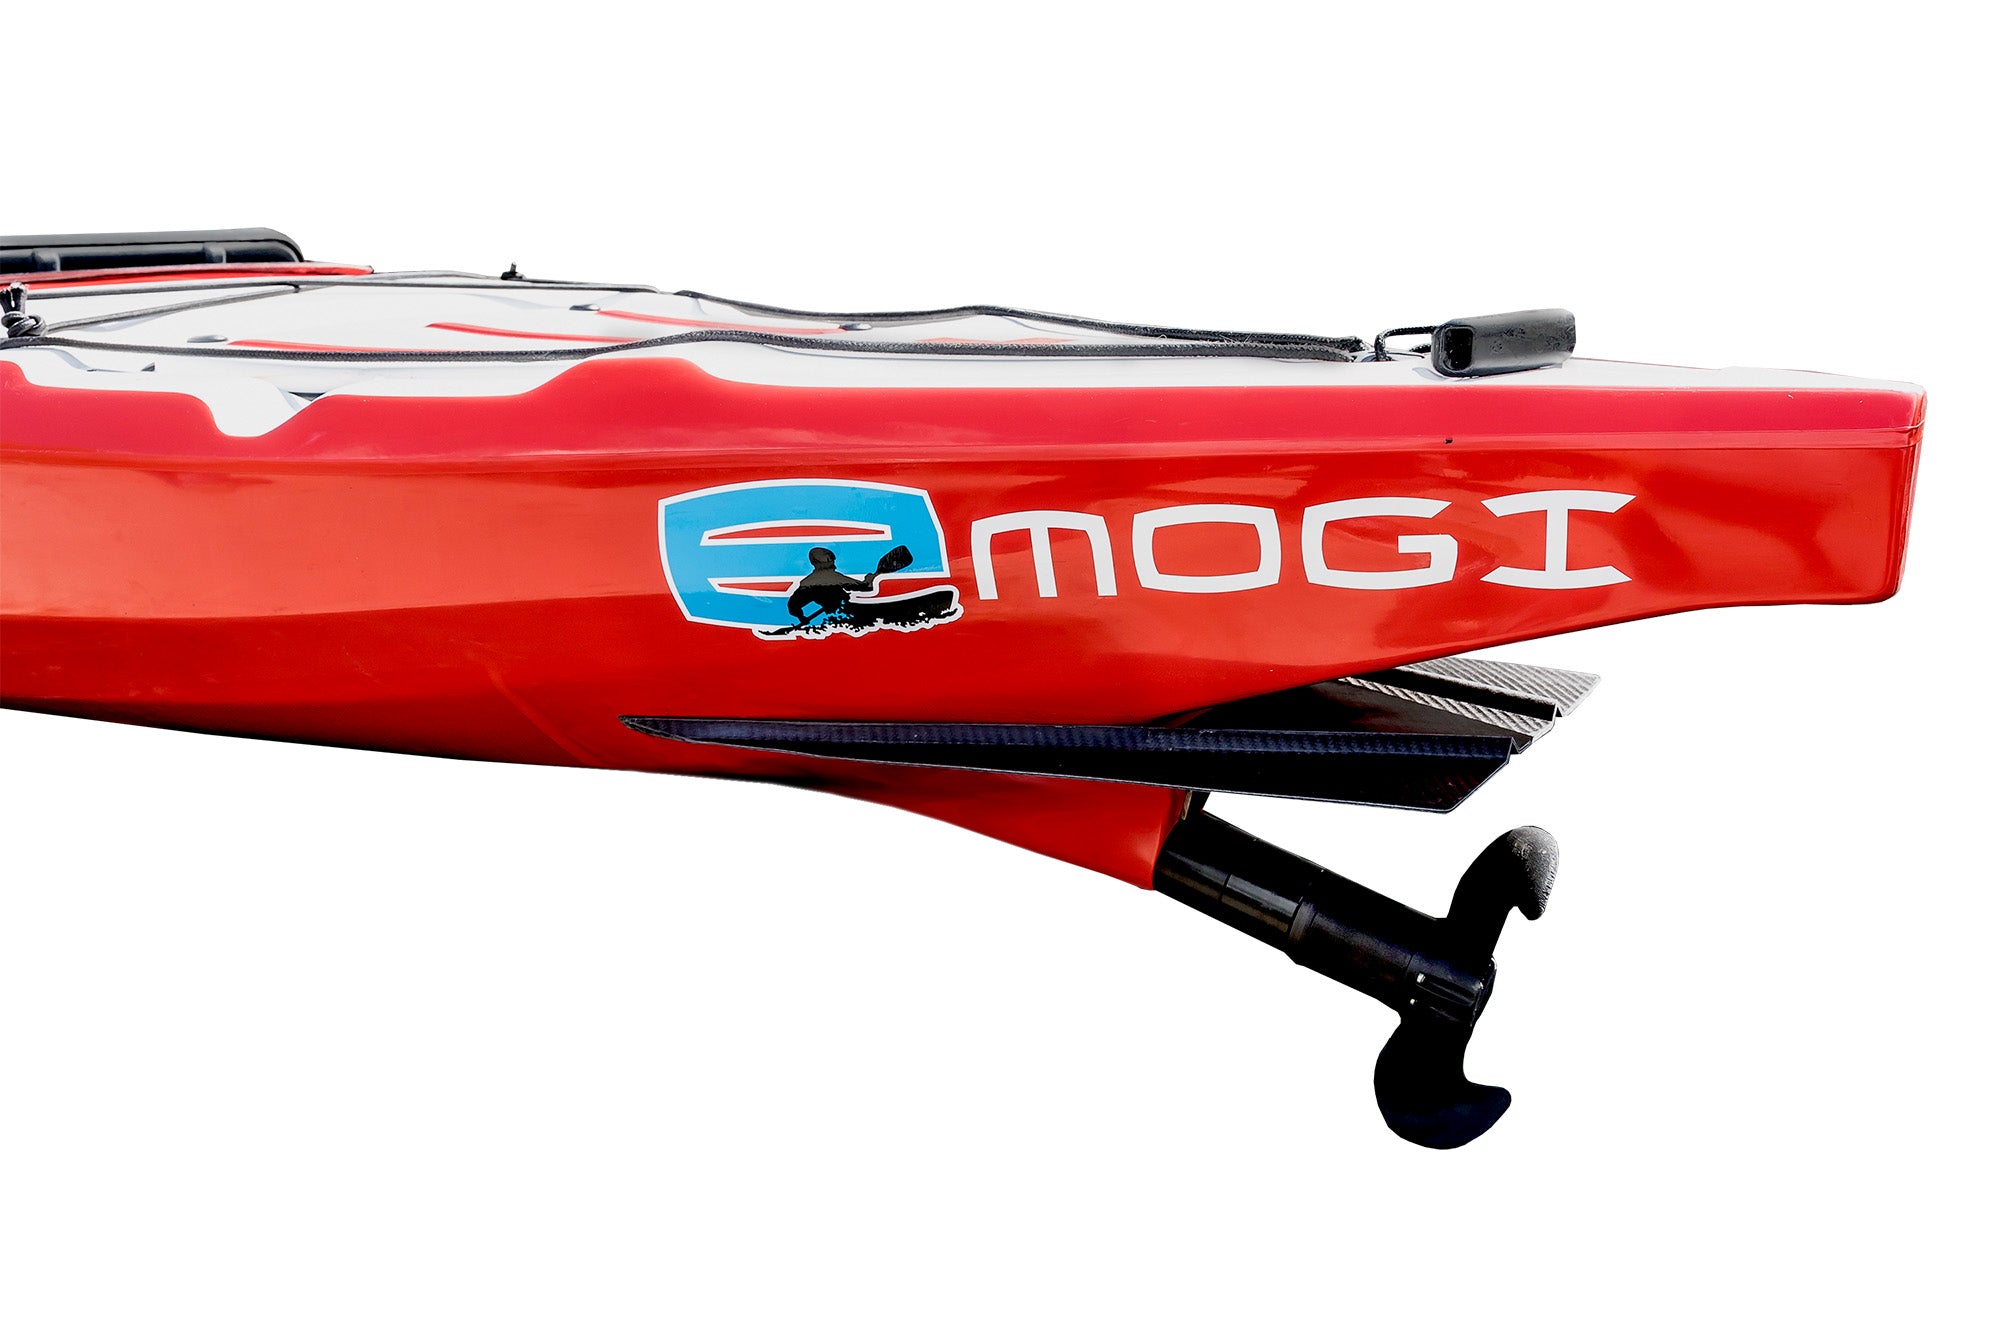 eMogi electric kayaks